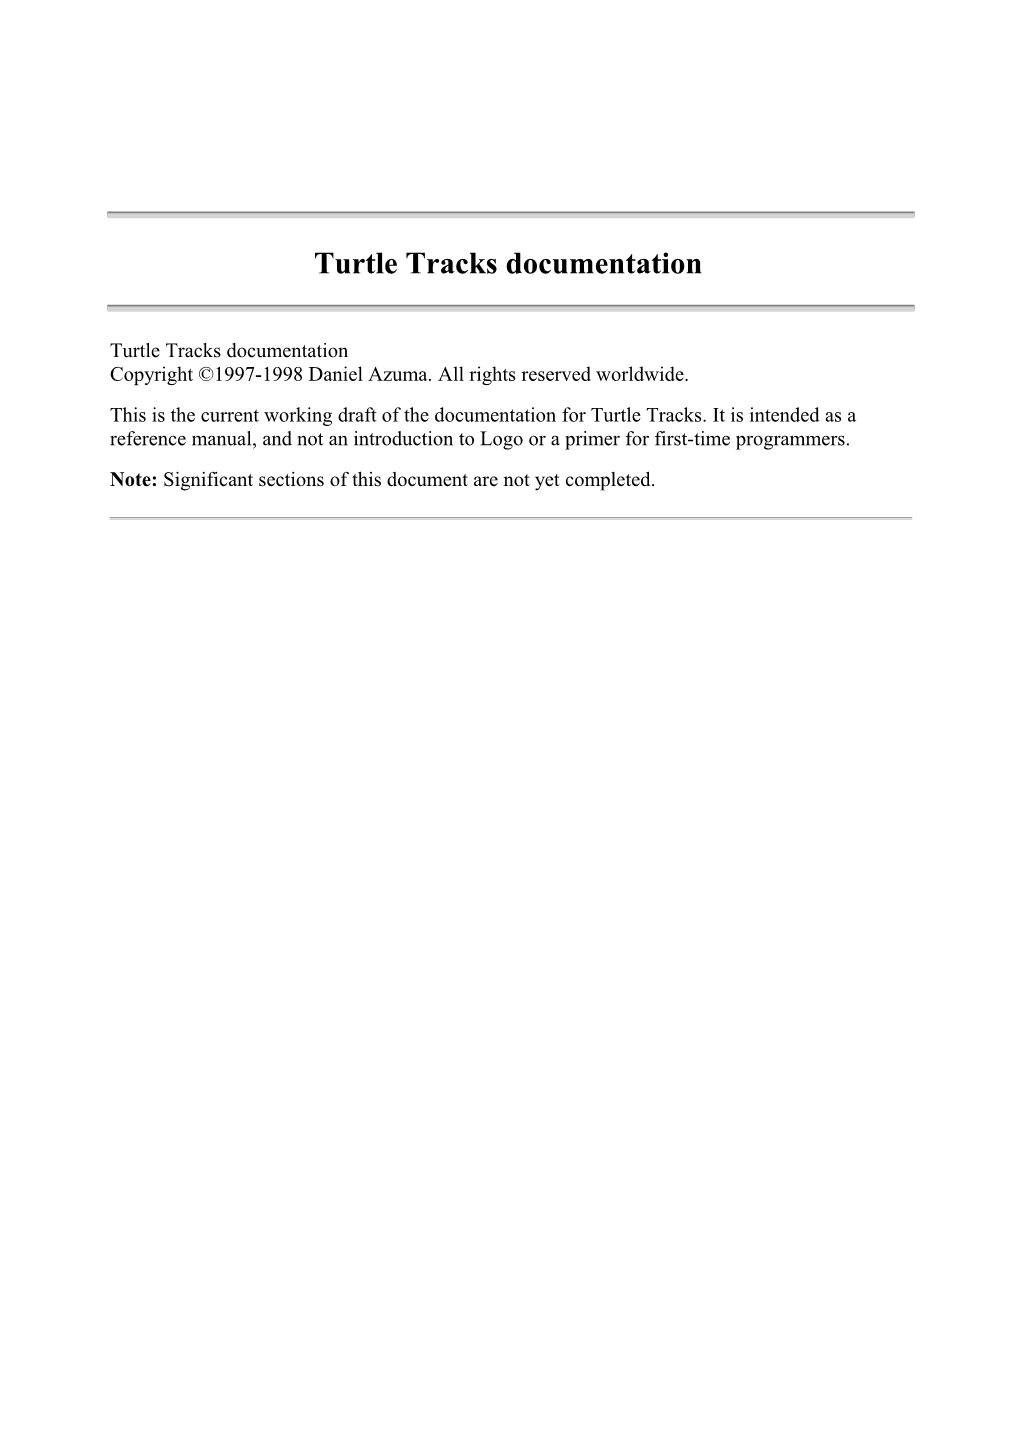 Turtle Tracks Documentation